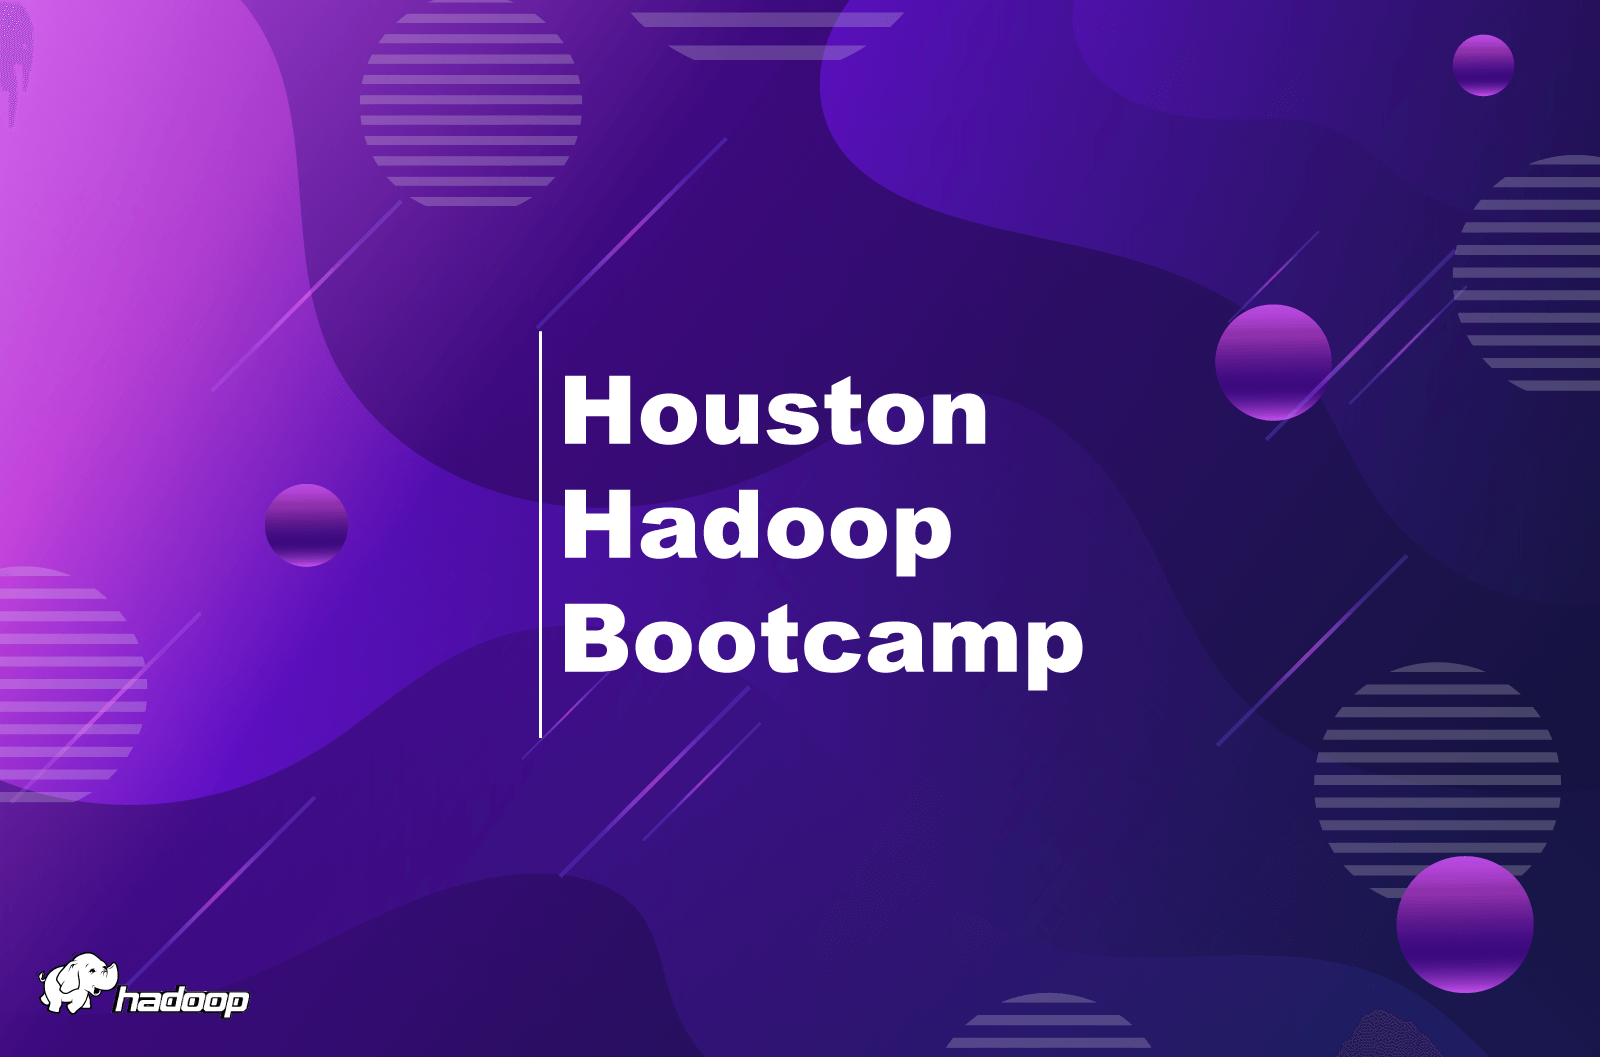 Houston Hadoop Bootcamp was a real success